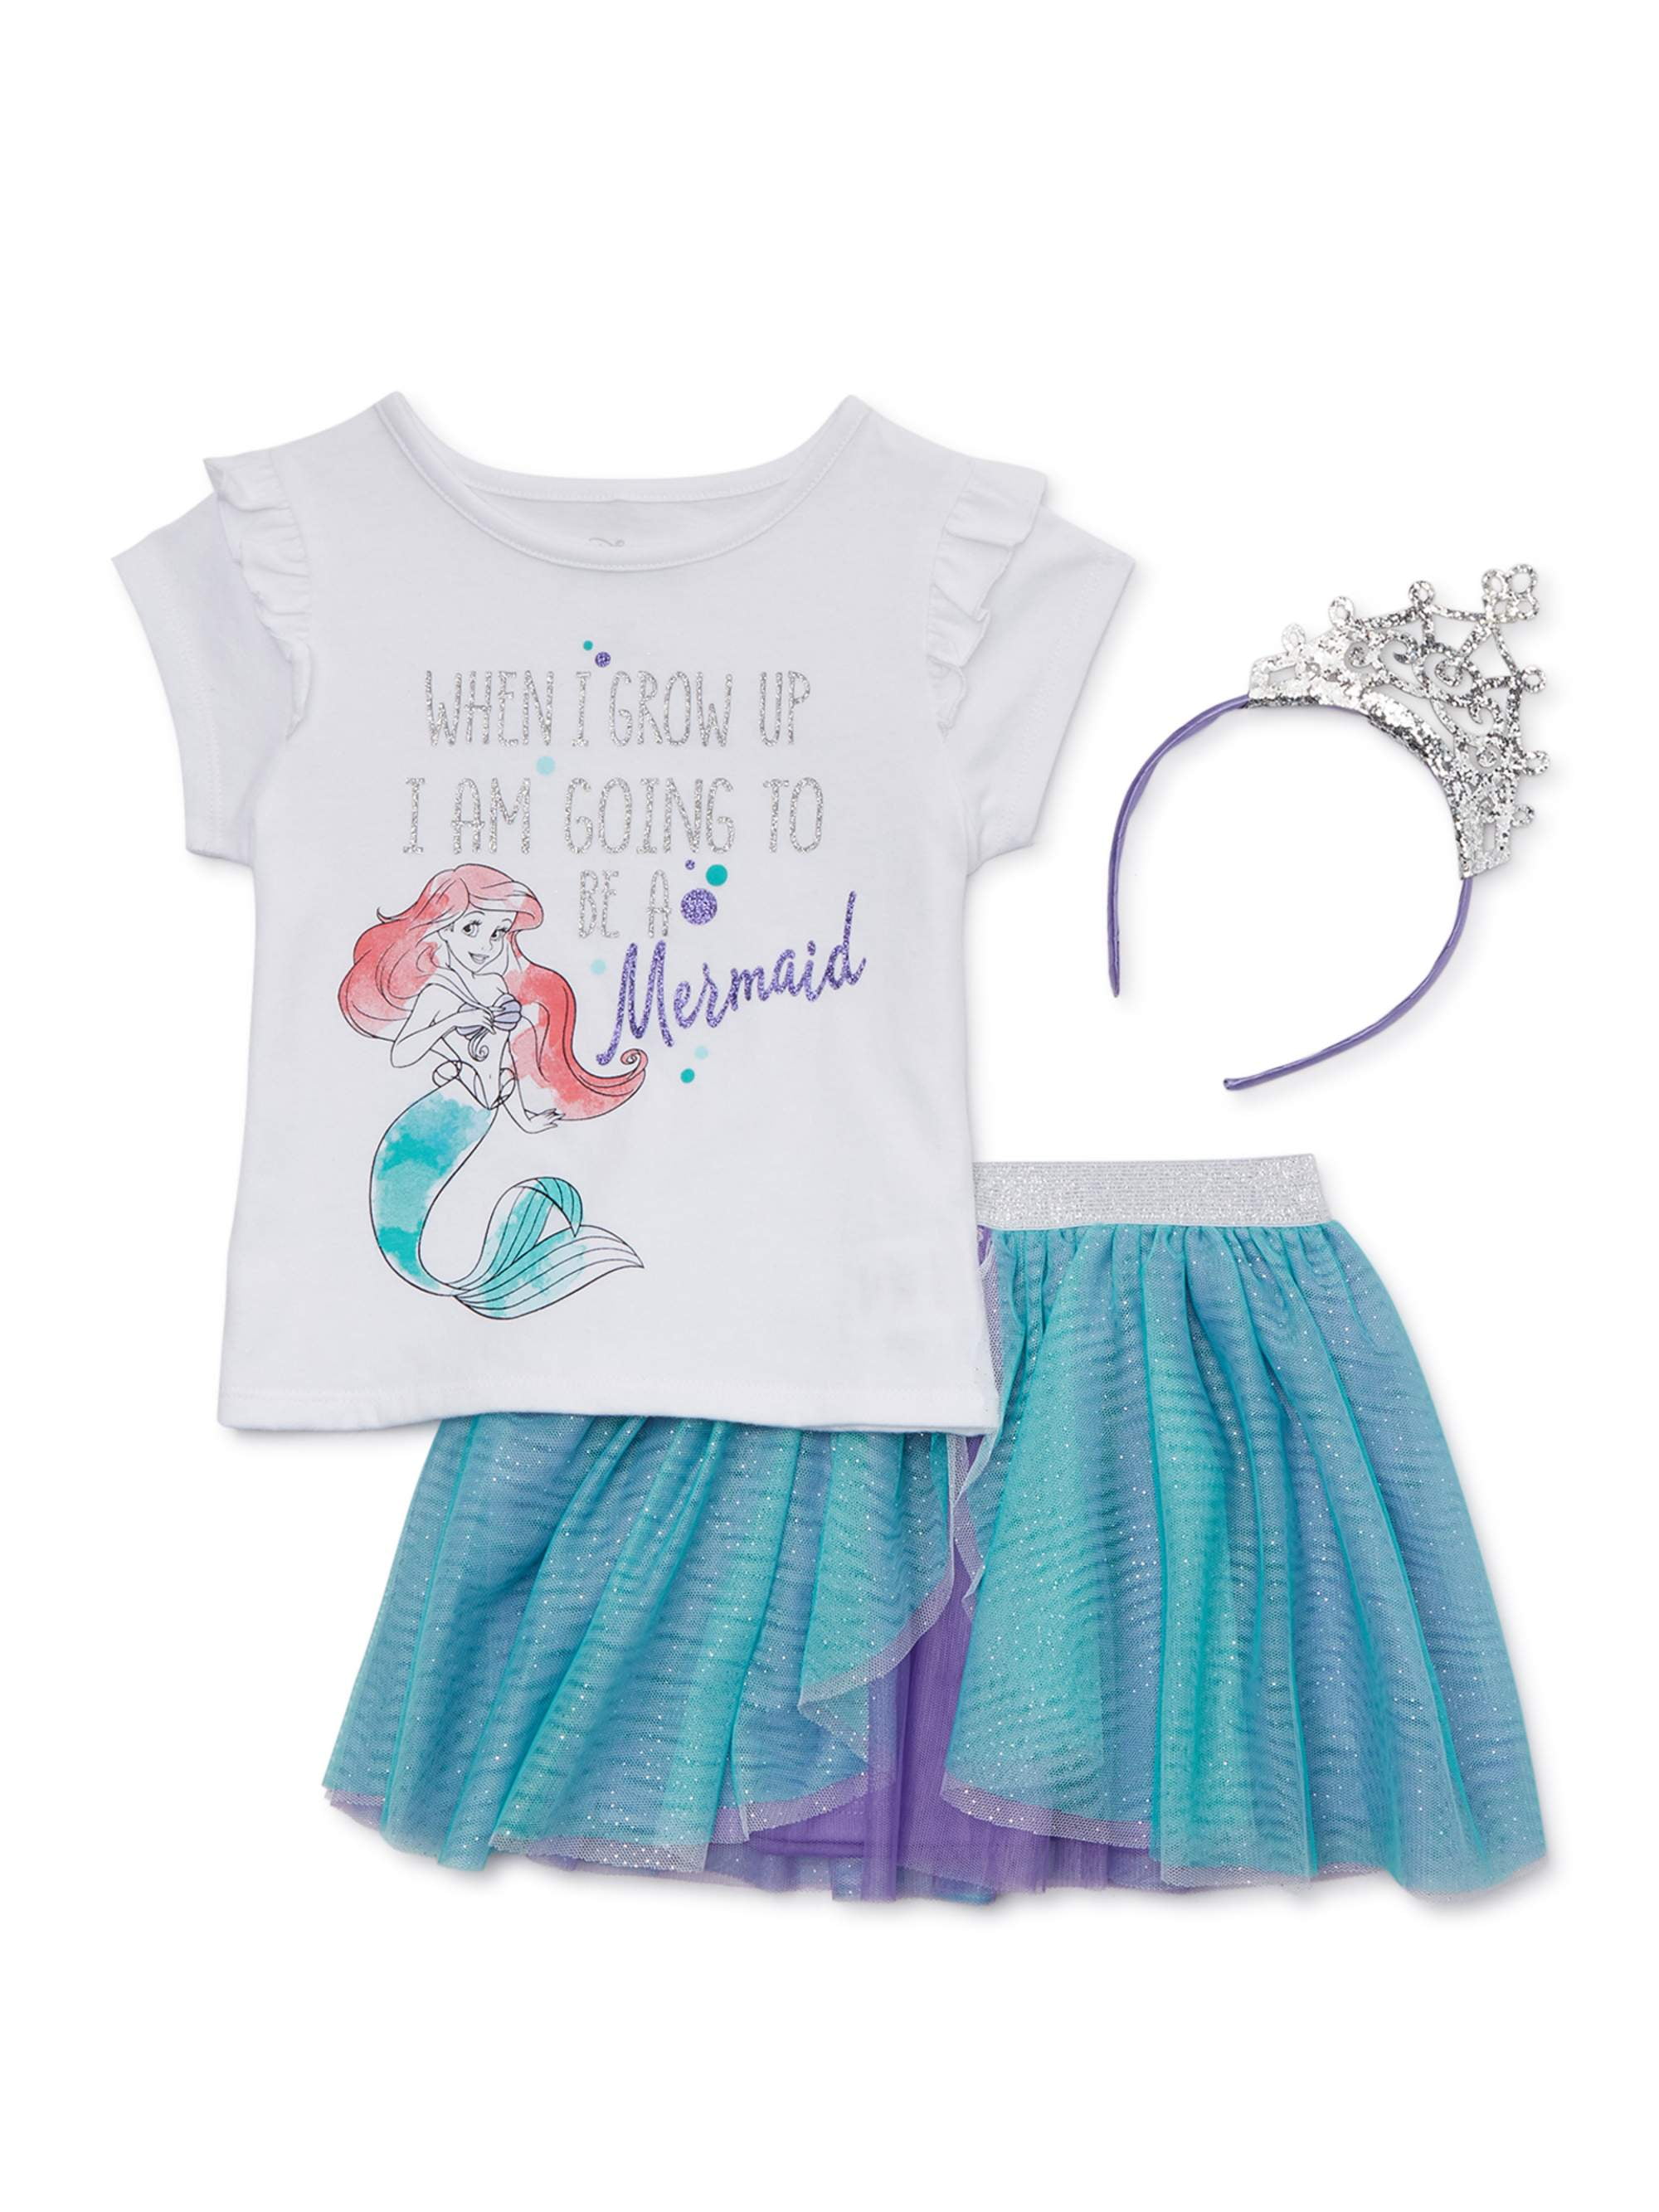 Little Mermaid Princess Ariel Hot PInk Tutu Shirt Headband 5th Birthday Outfit